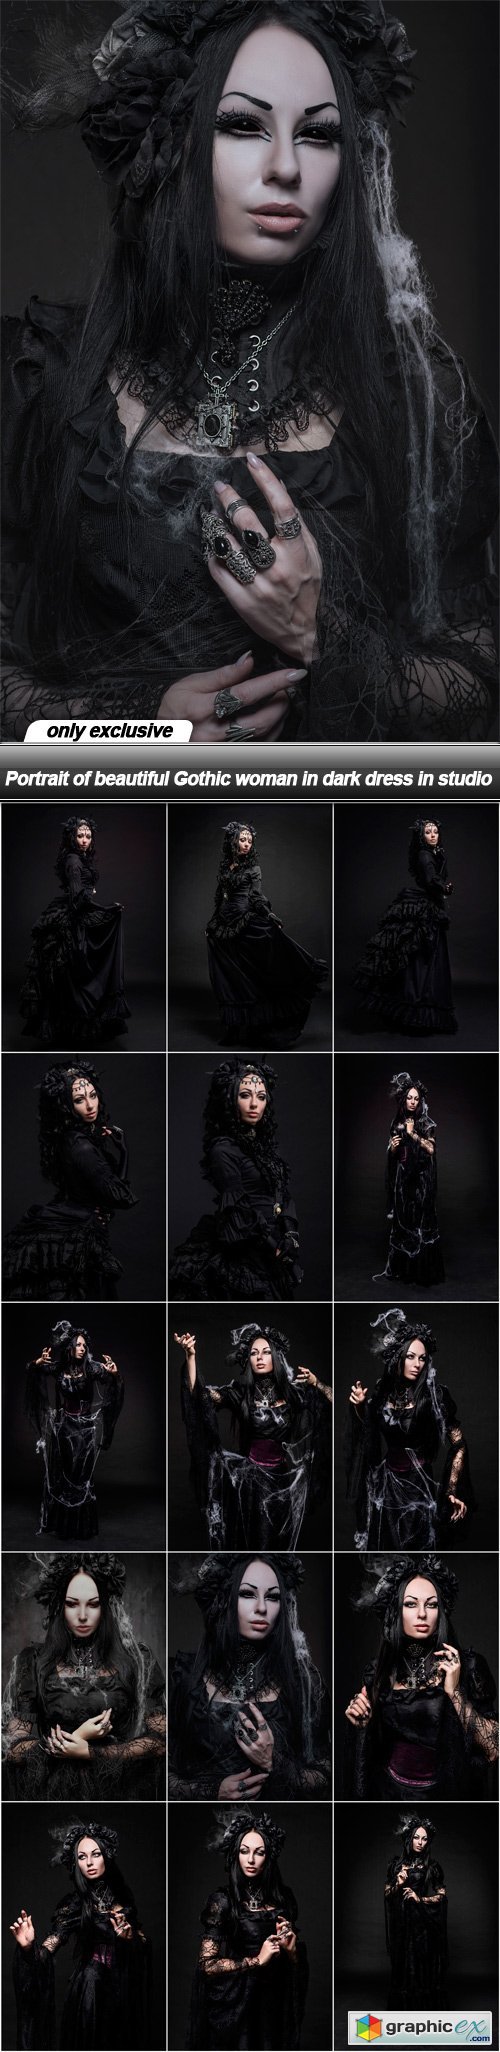 Portrait of beautiful Gothic woman in dark dress in studio - 15 UHQ JPEG